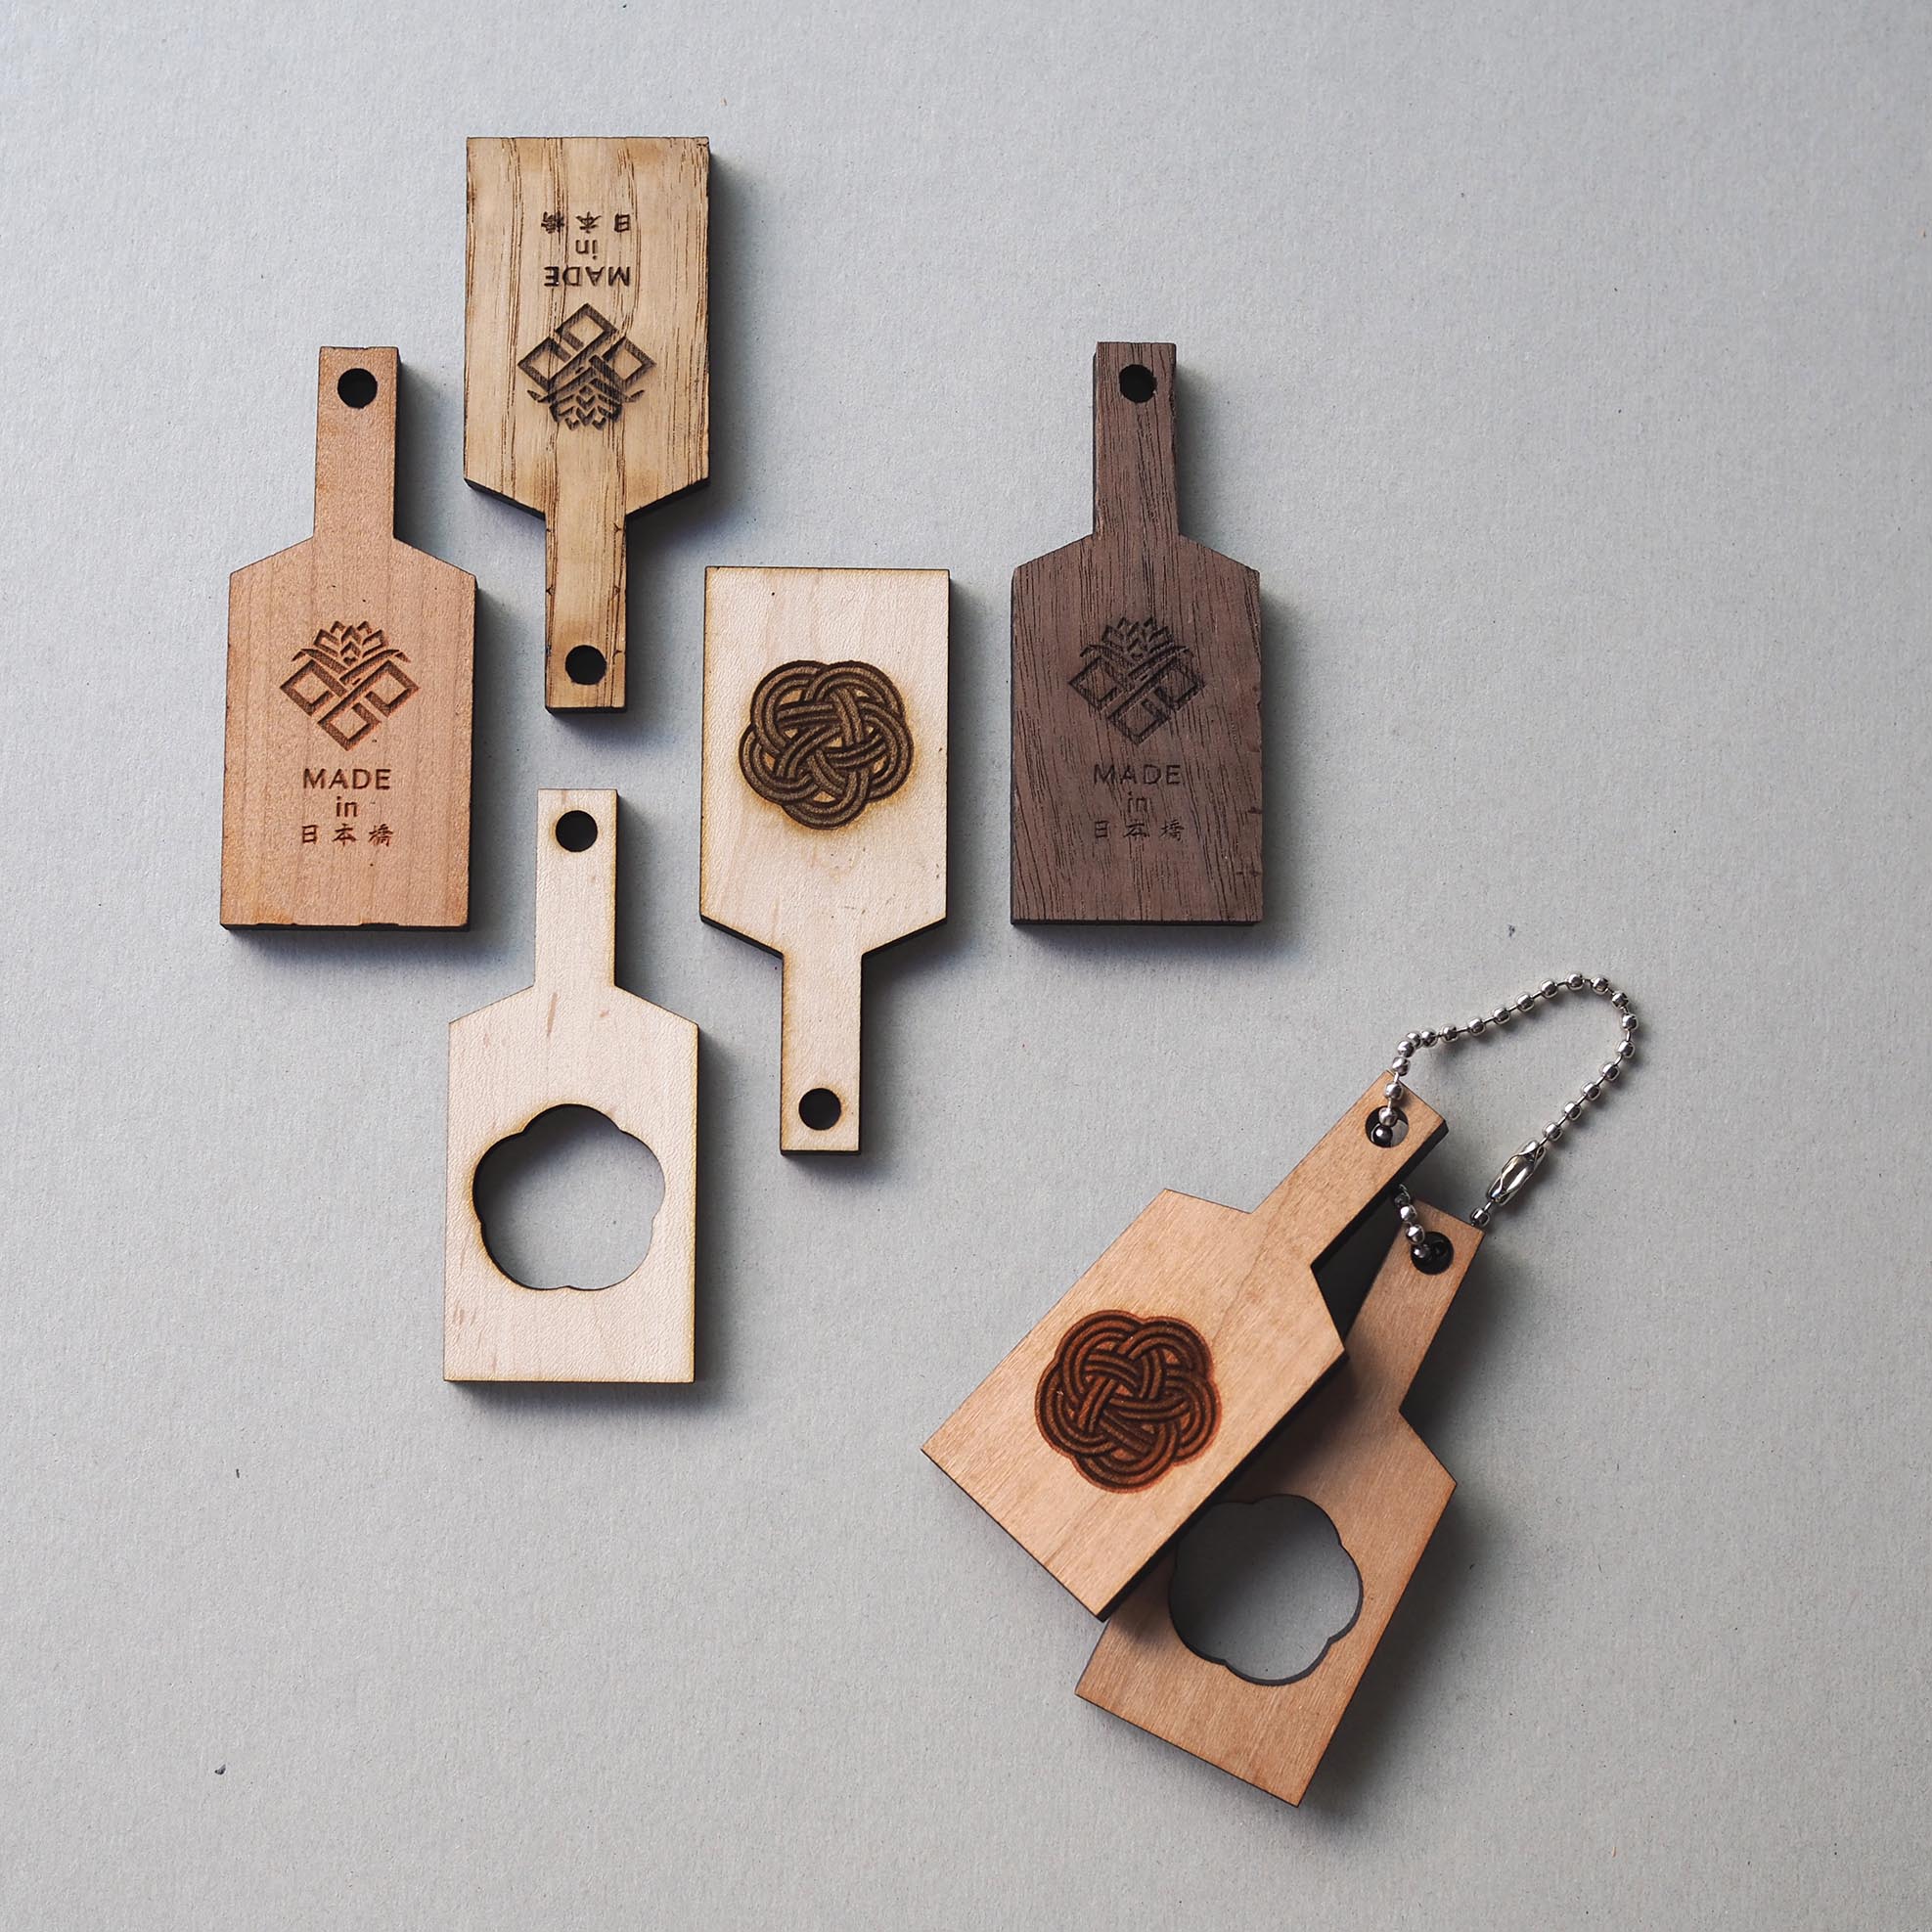 Wooden key holder 02 [Plum] Plum knot